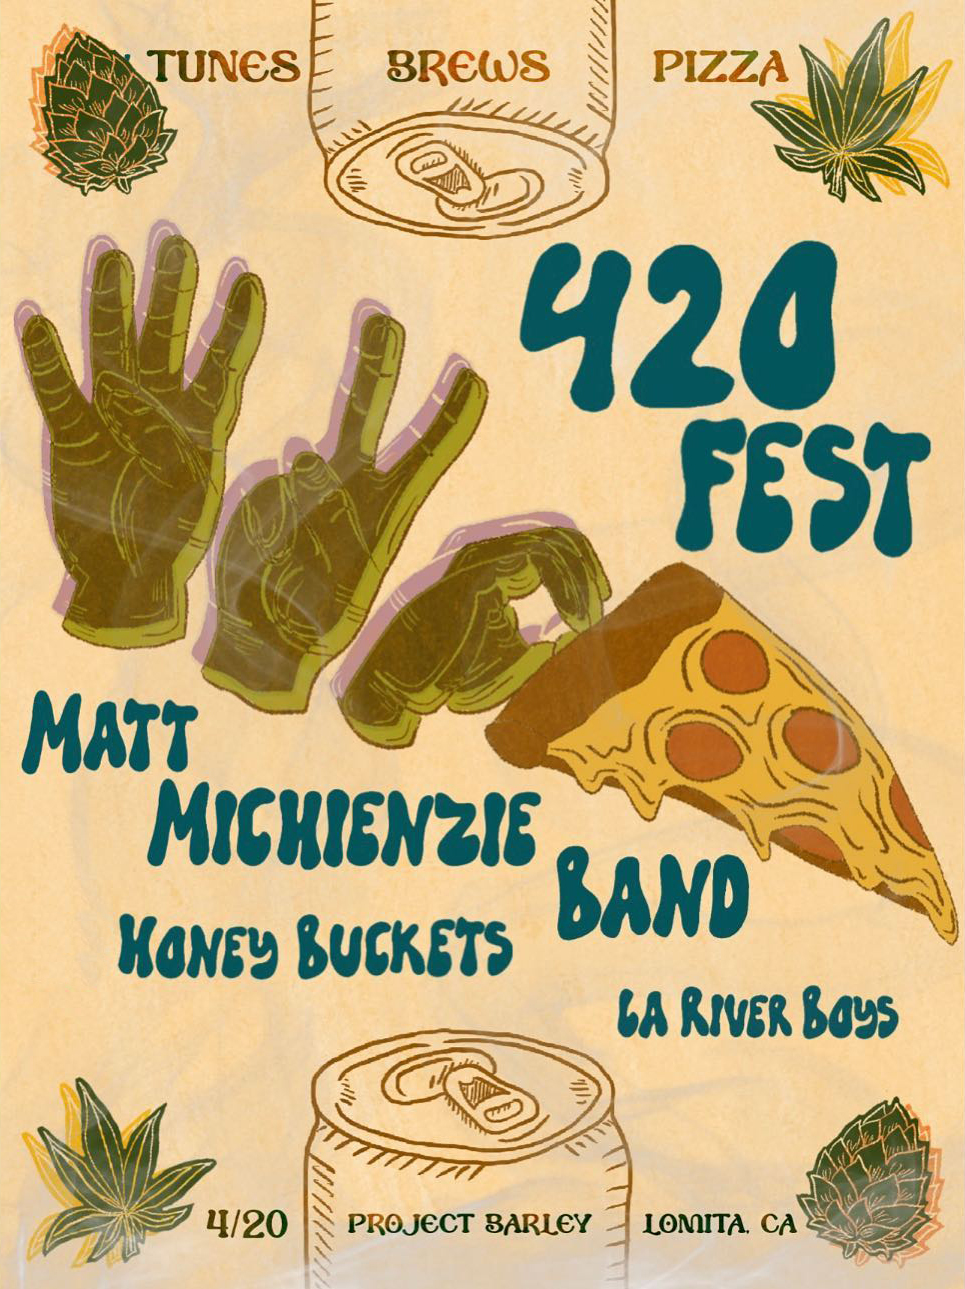 420 Fest @ Project Barley Brewery & Pizzeria with Matt Michienzie Band & LA River Boys